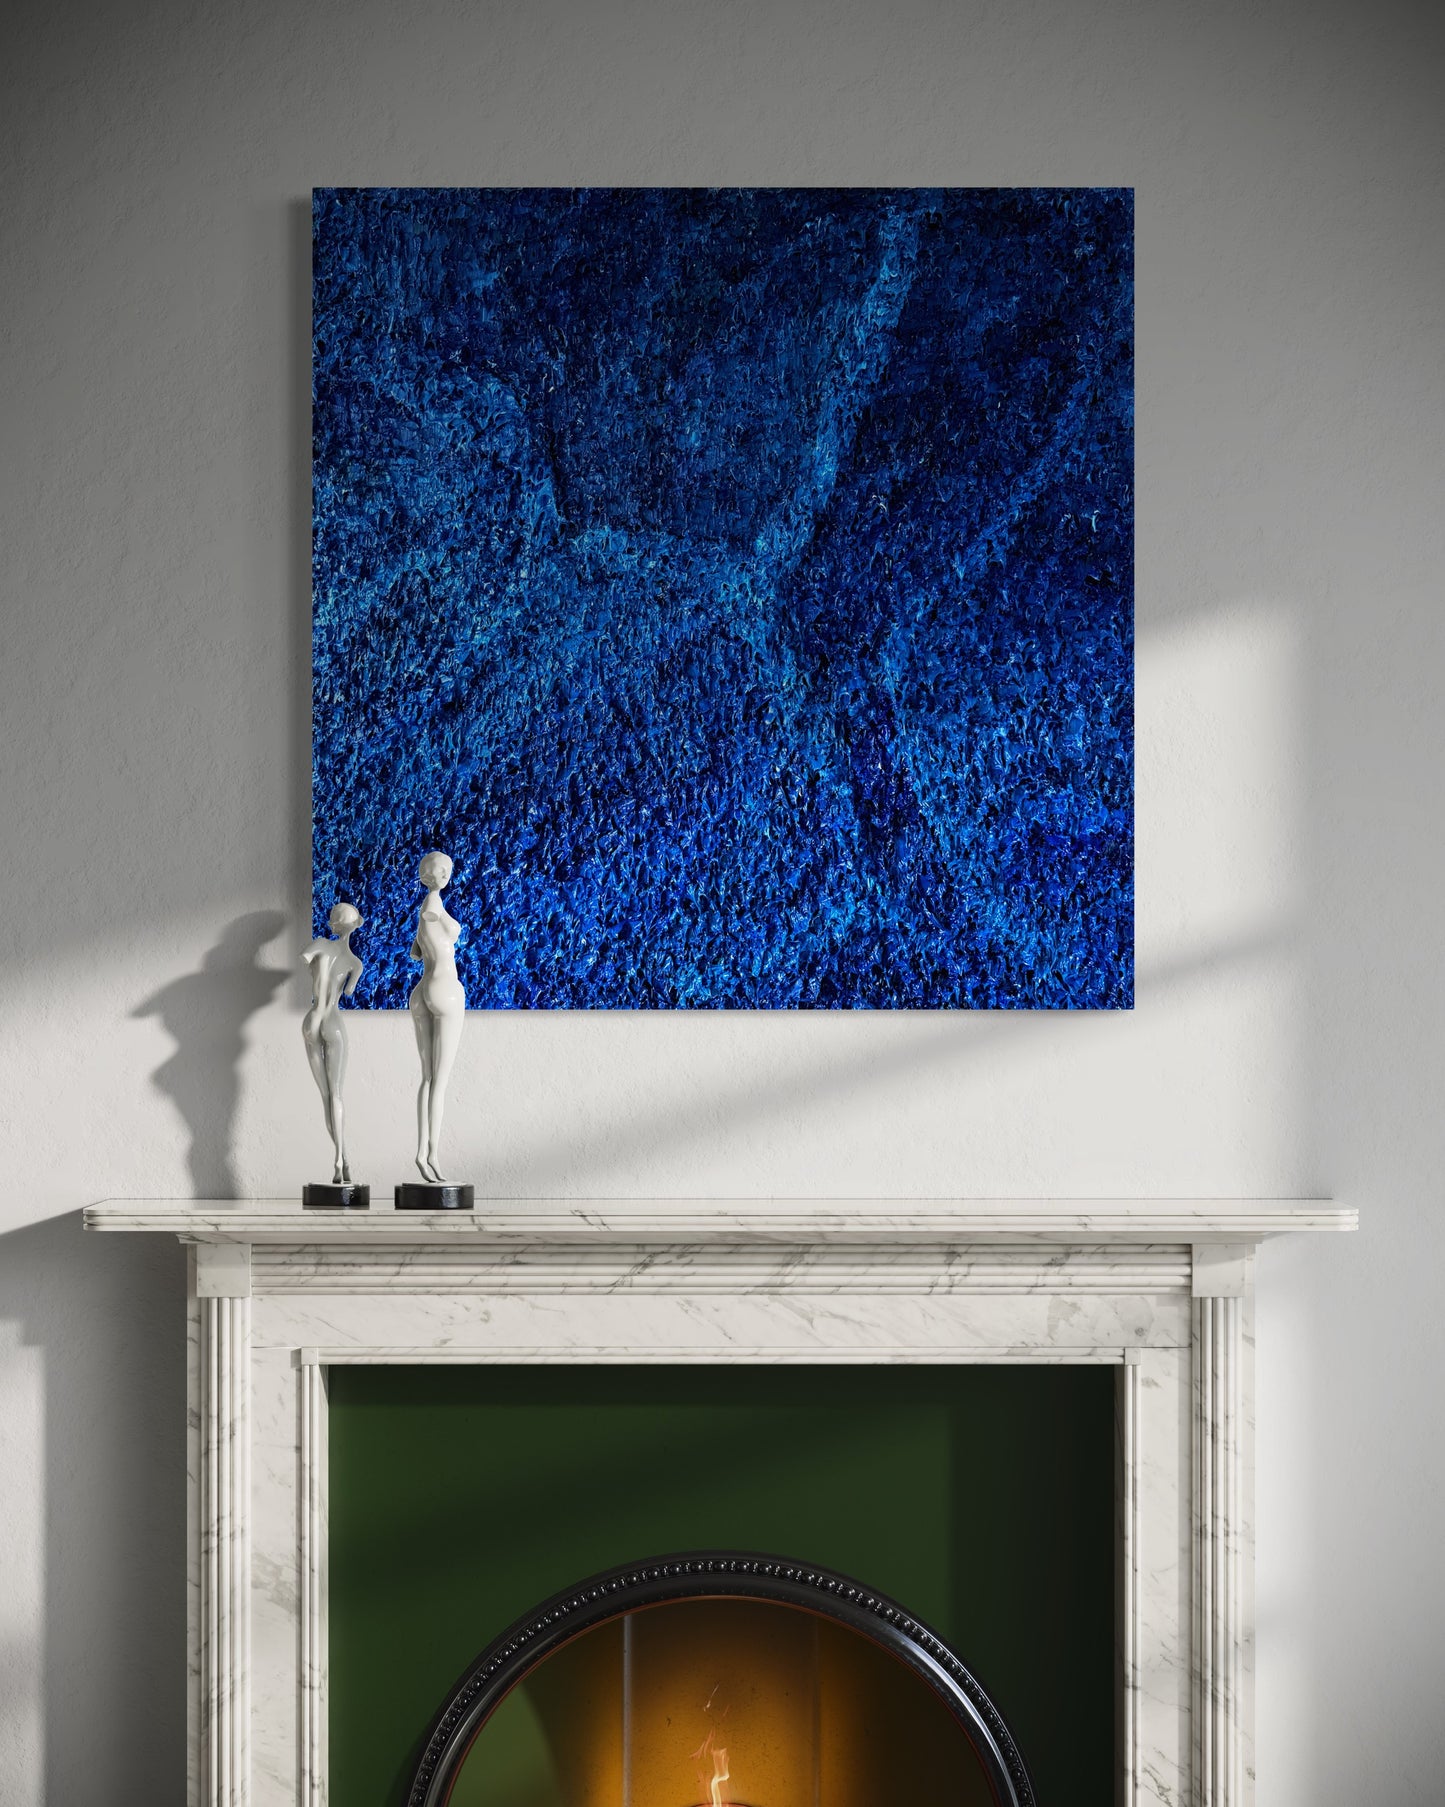 Blue Ocean series “Line” - eļļas glezna, 100x100cm